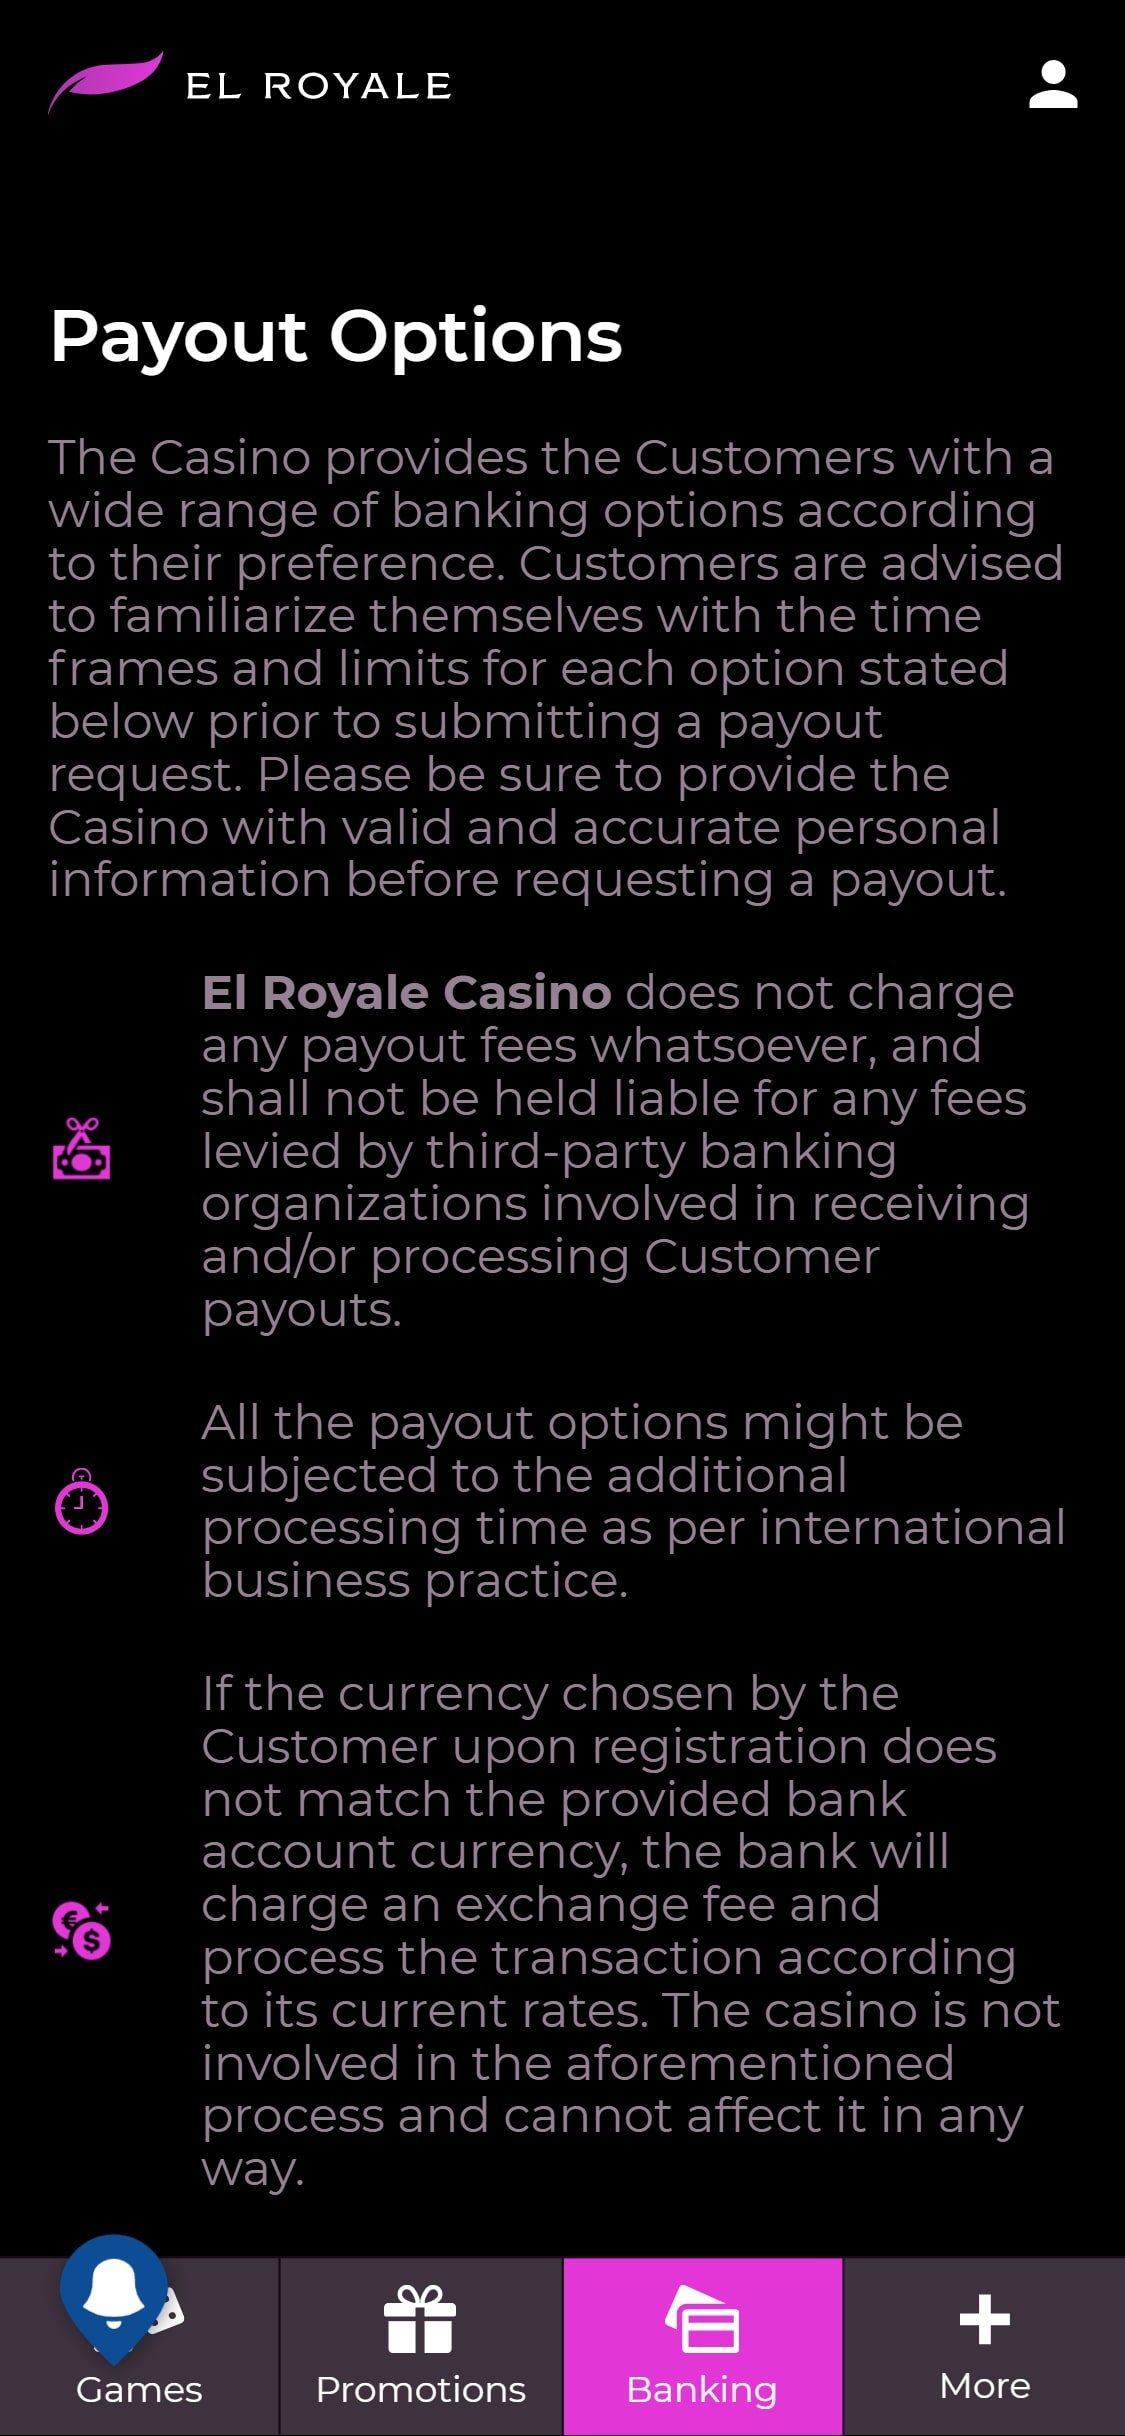 El Royale Casino Mobile Payment Methods Review